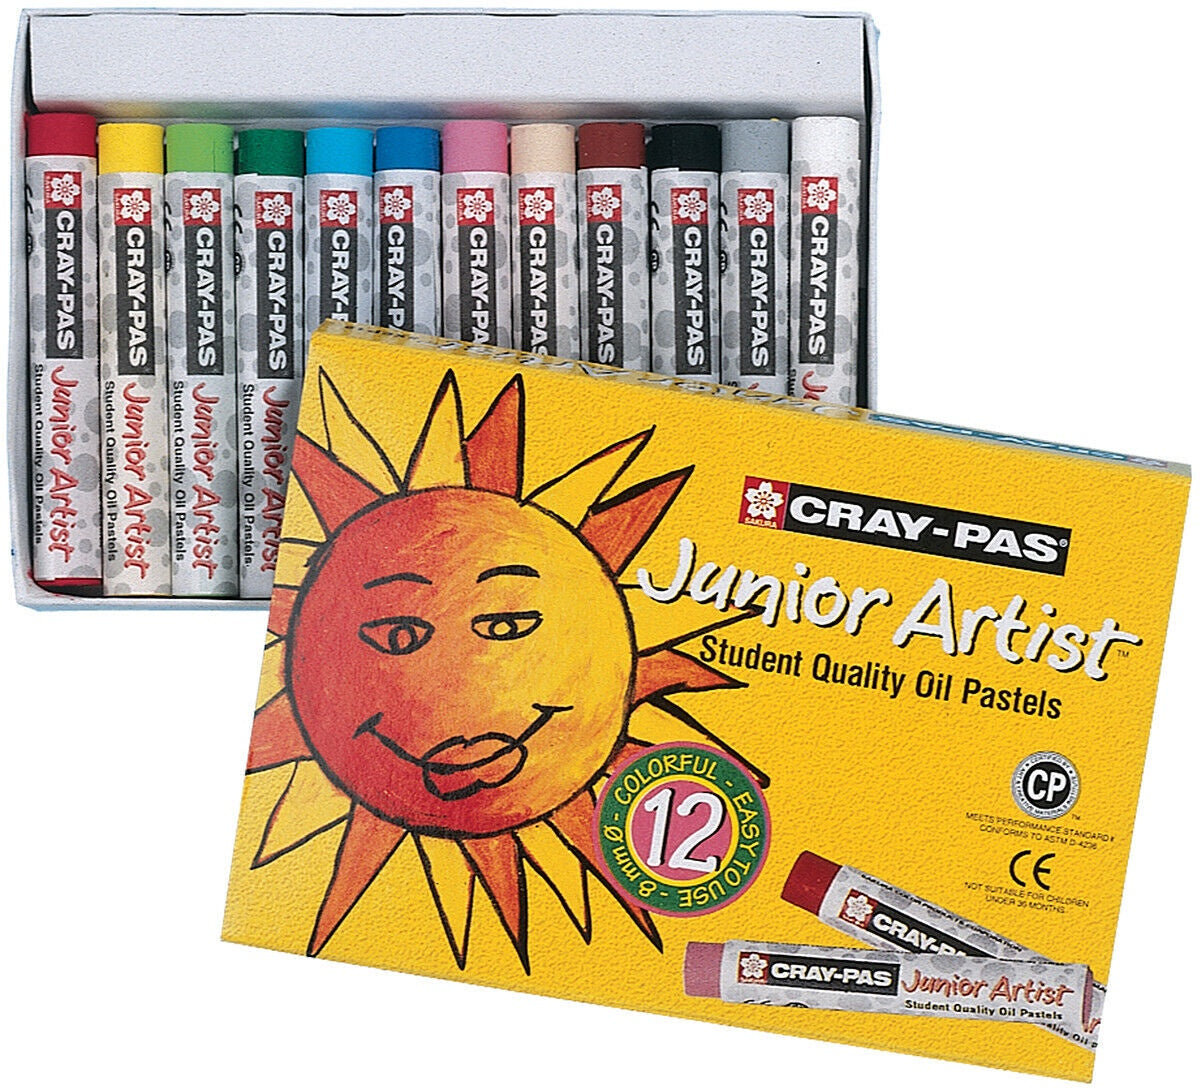 Cray-Pas Junior Artist Black Oil Pastels